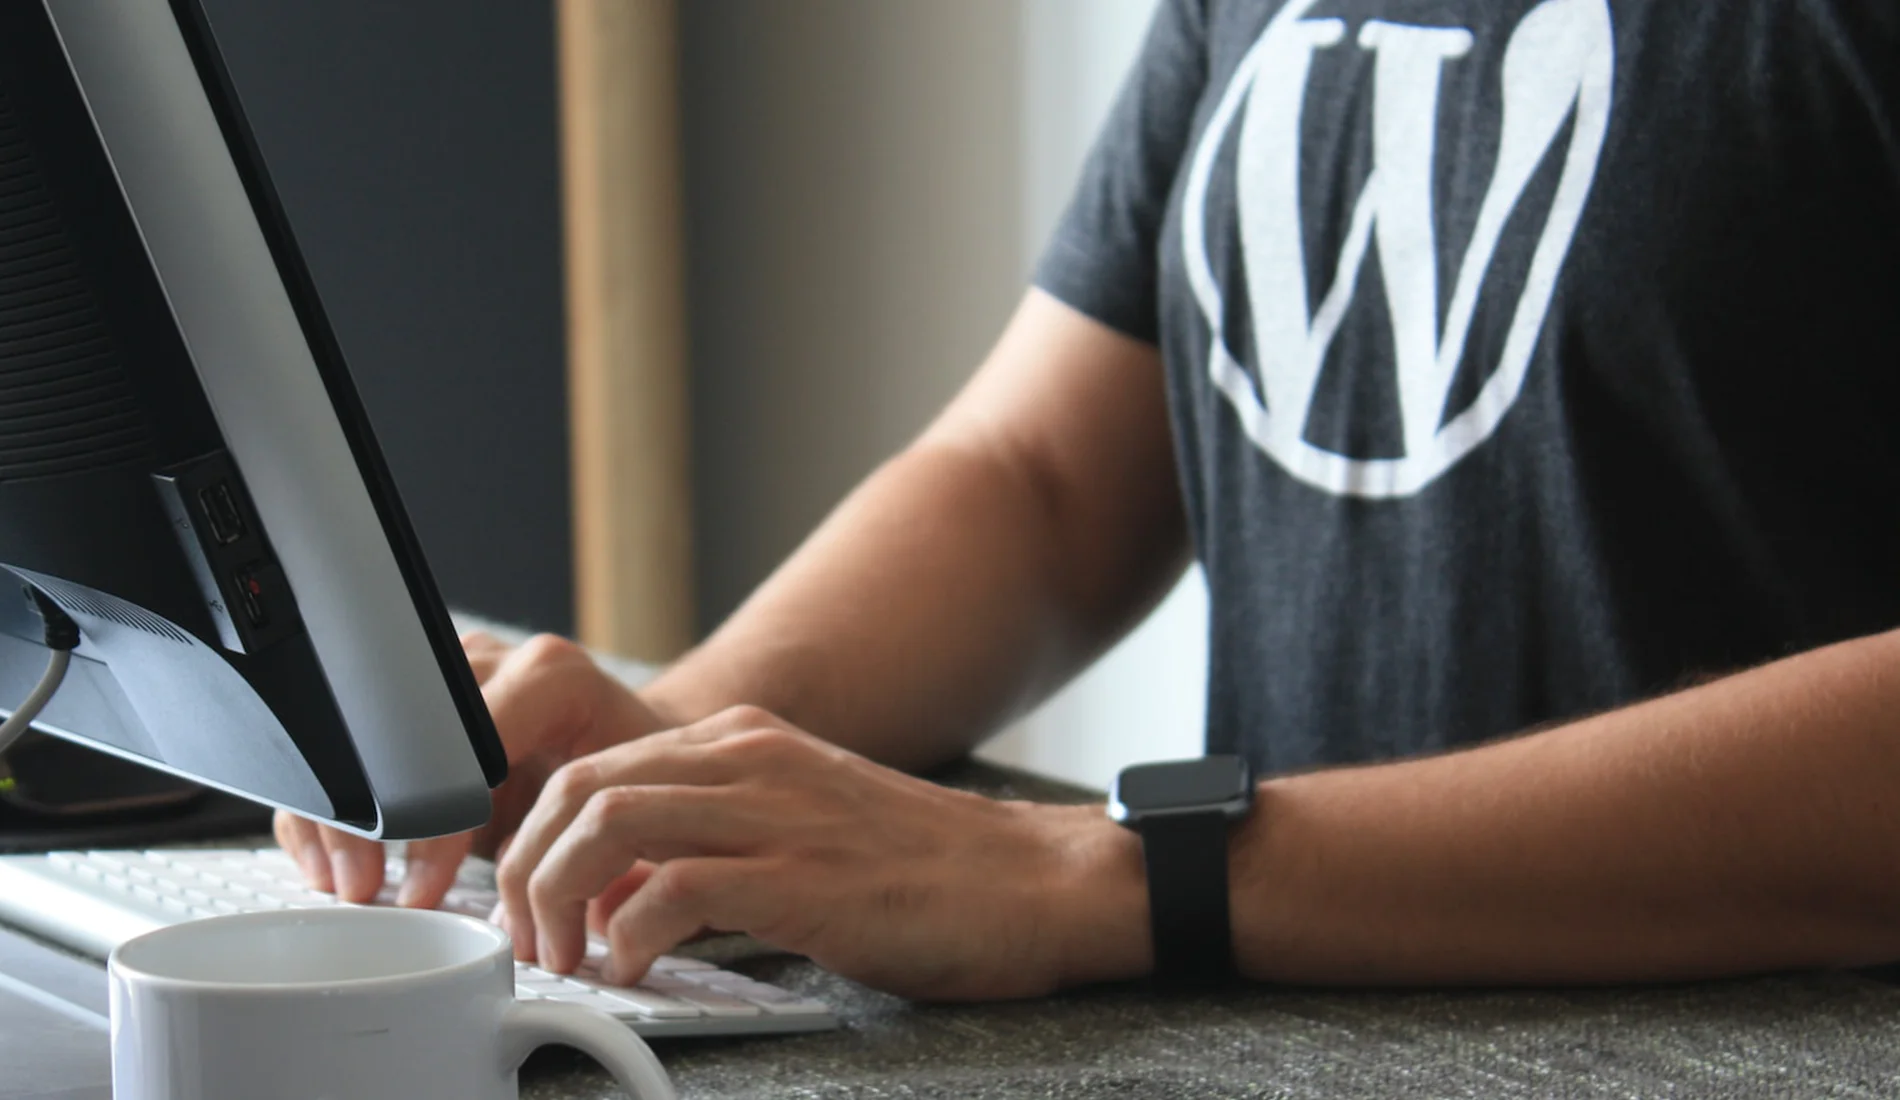 Why Do You Use WordPress?